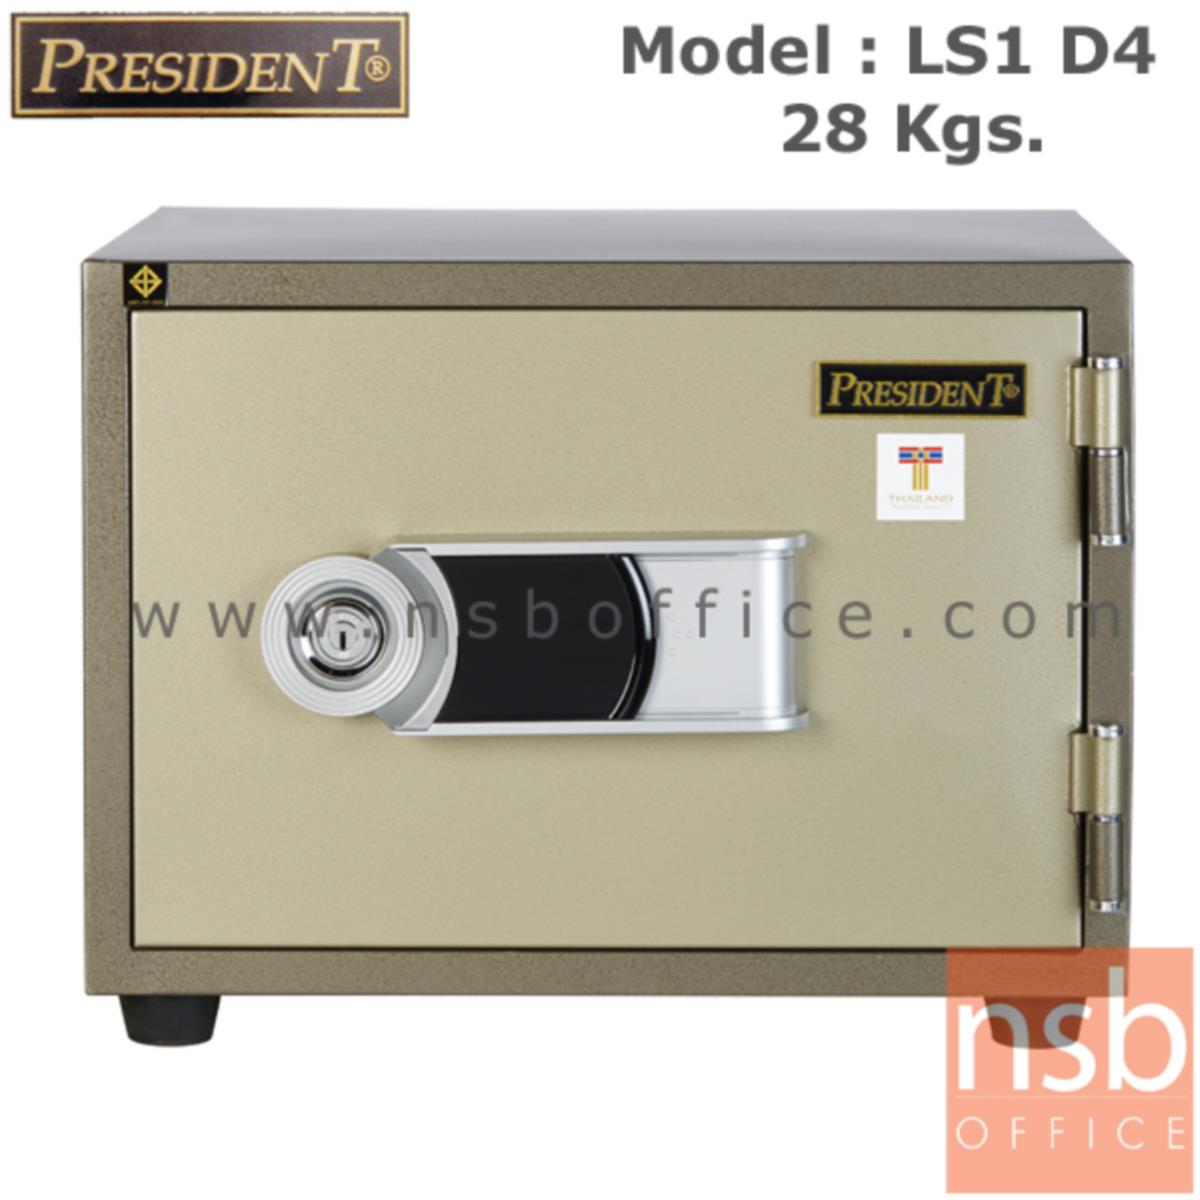 F05A068:ตู้เซฟนิรภัยชนิดดิจิตอลแบบใหม่ 28 กก. รุ่น PRESIDENT-LS1D4 มี 1 กุญแจ 1 รหัส (รหัสใช้กดหน้าตู้)